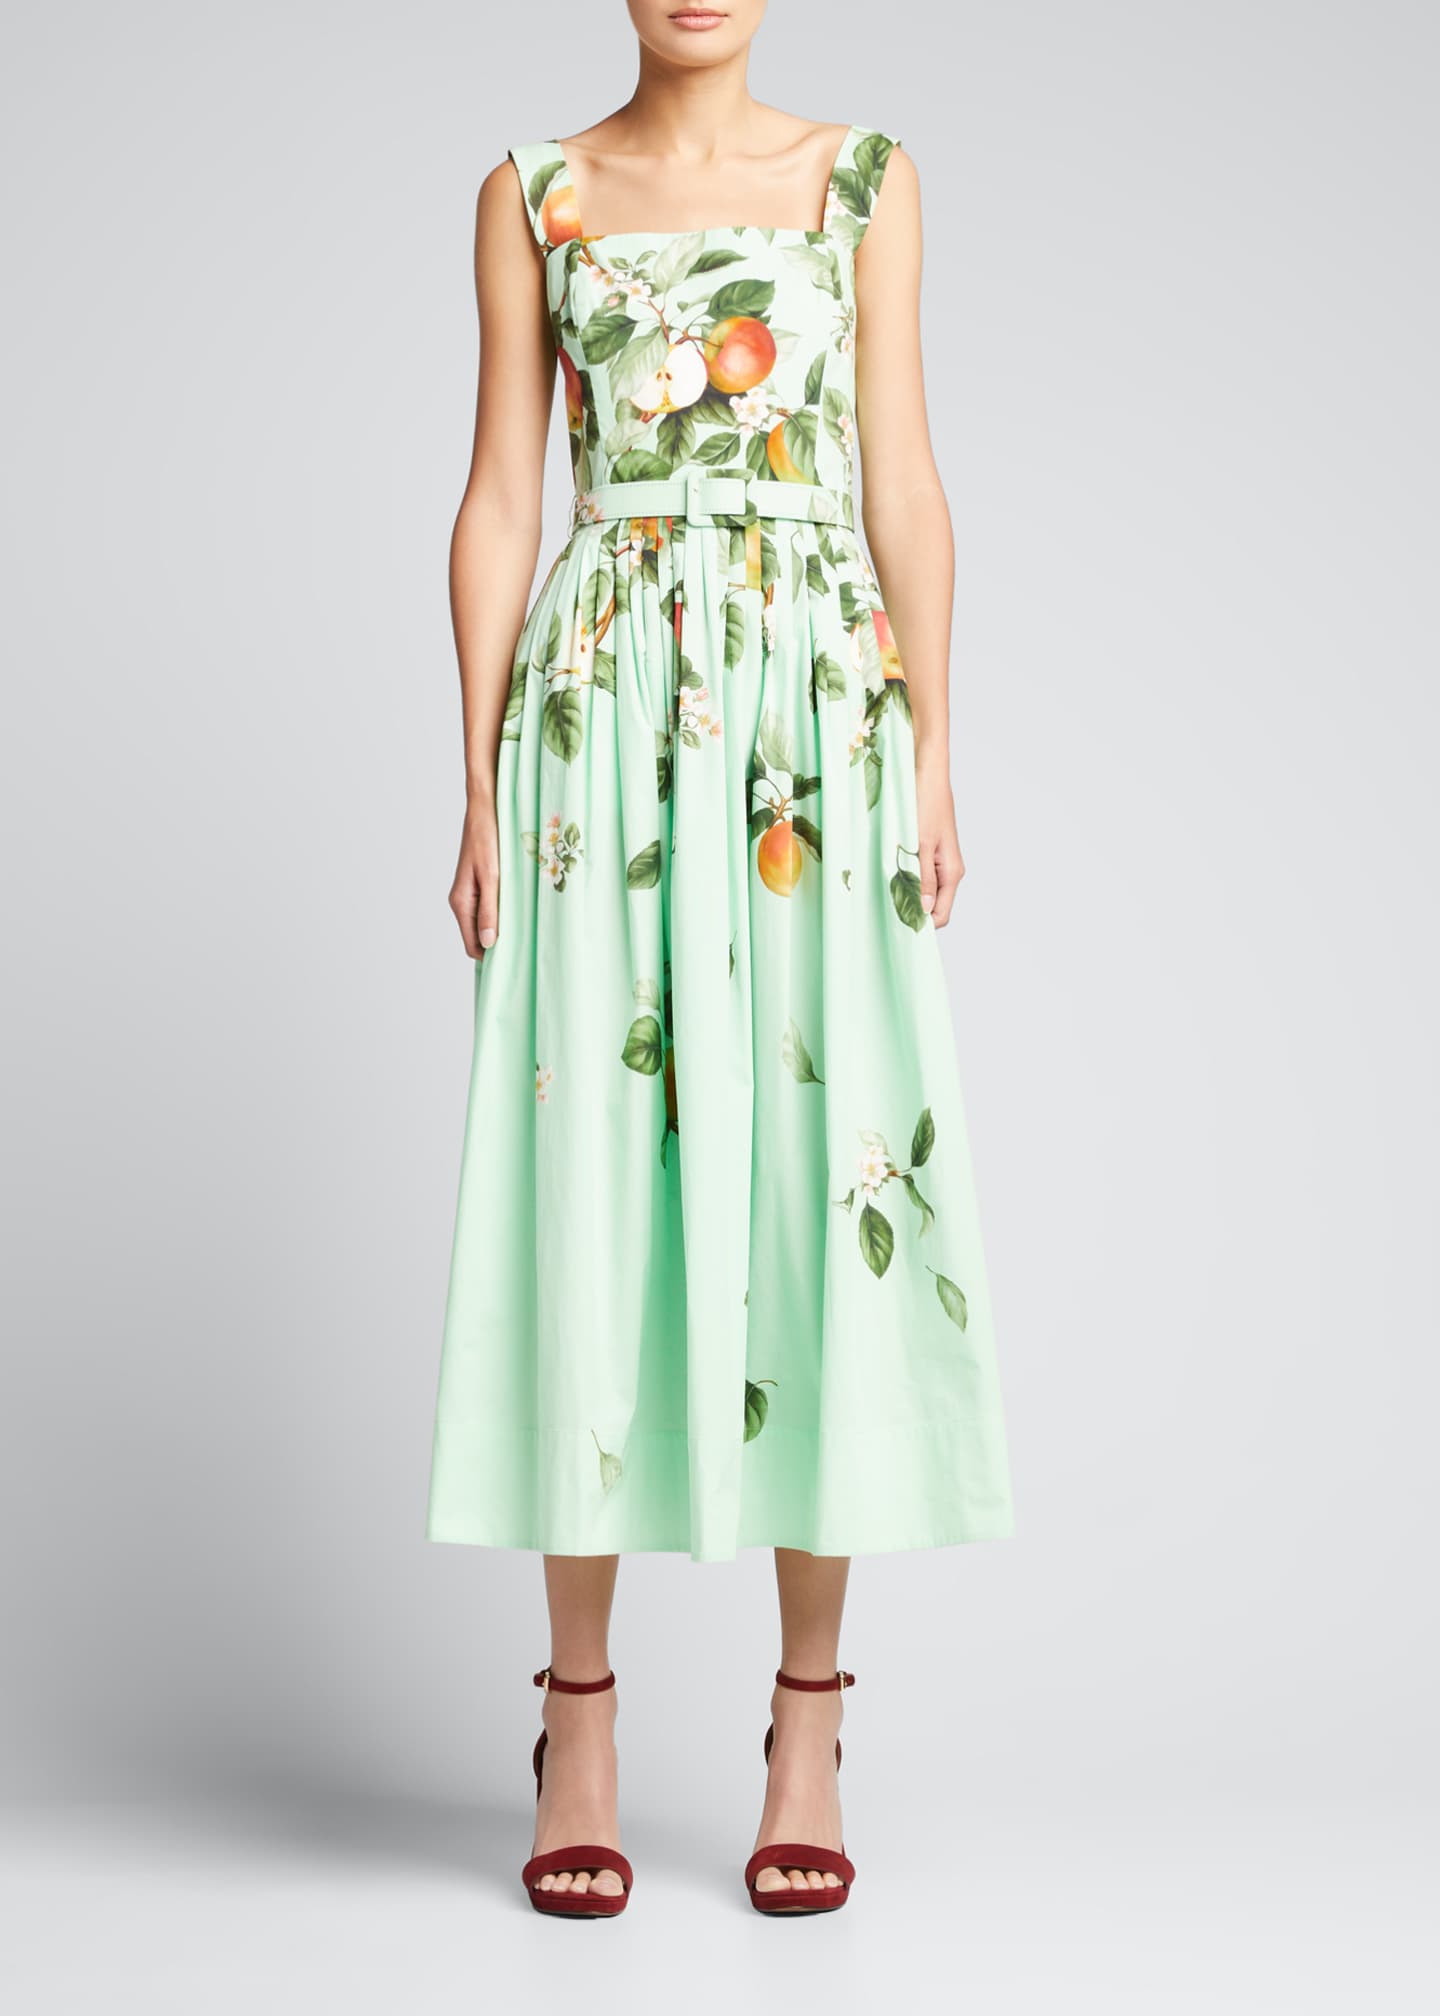 Oscar de la Renta Degrade Apple Blossom-Print Belted Tank Dress 